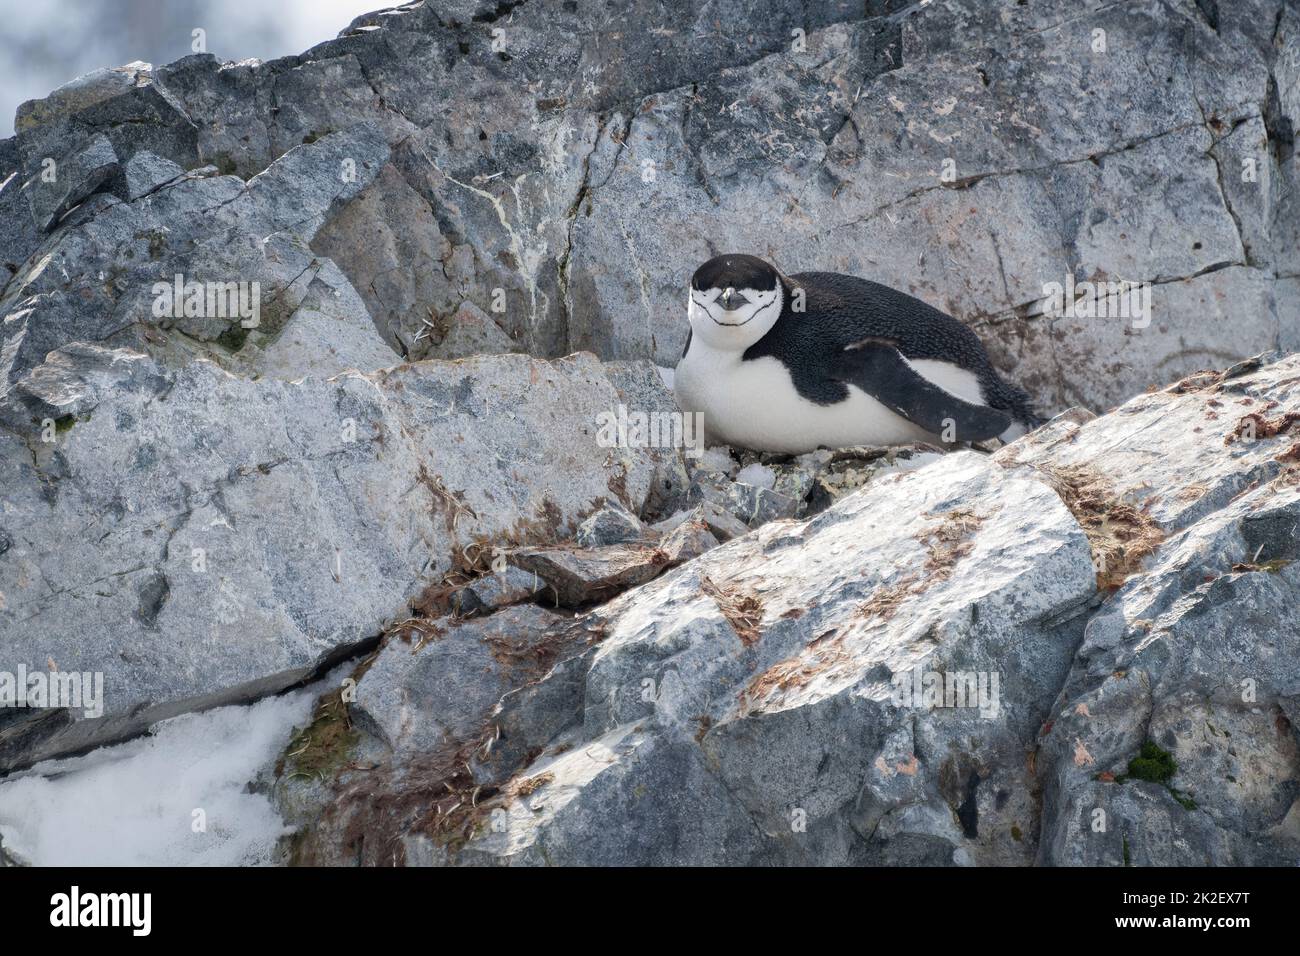 Chinstrap penguin lies on rock facing camera Stock Photo